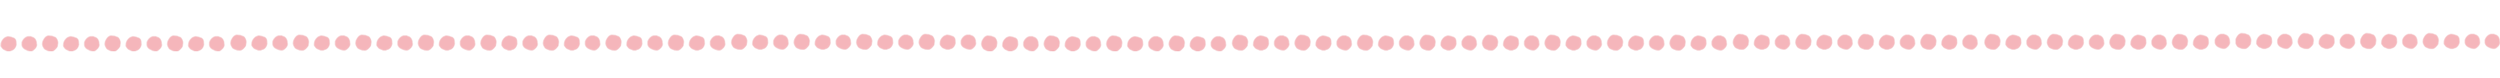 victoria-johnson-pink-dot-line.png